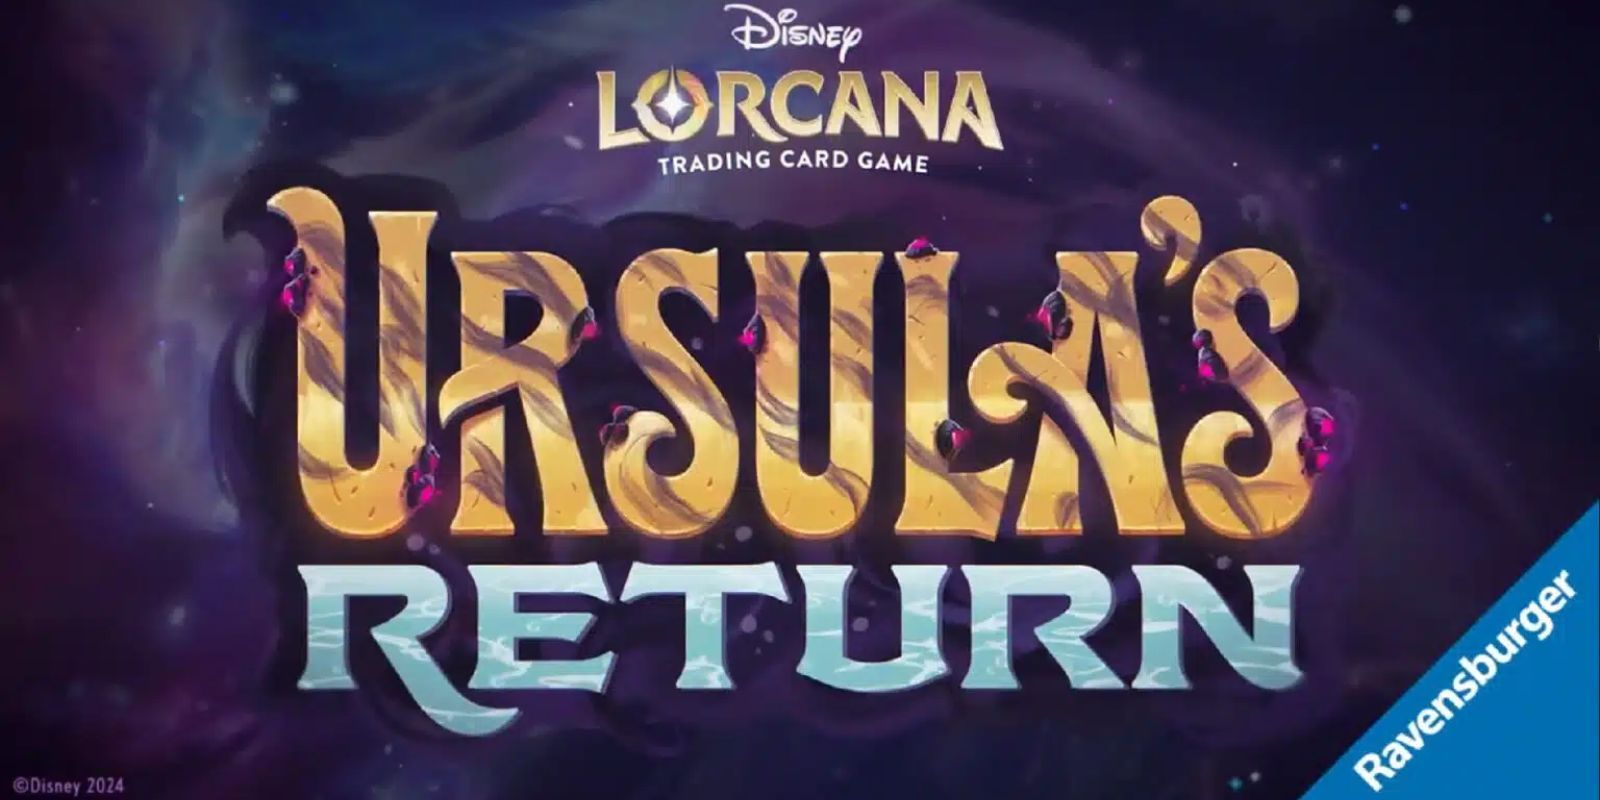 Disney Lorcana: Ursula's Return Starter Decks Review